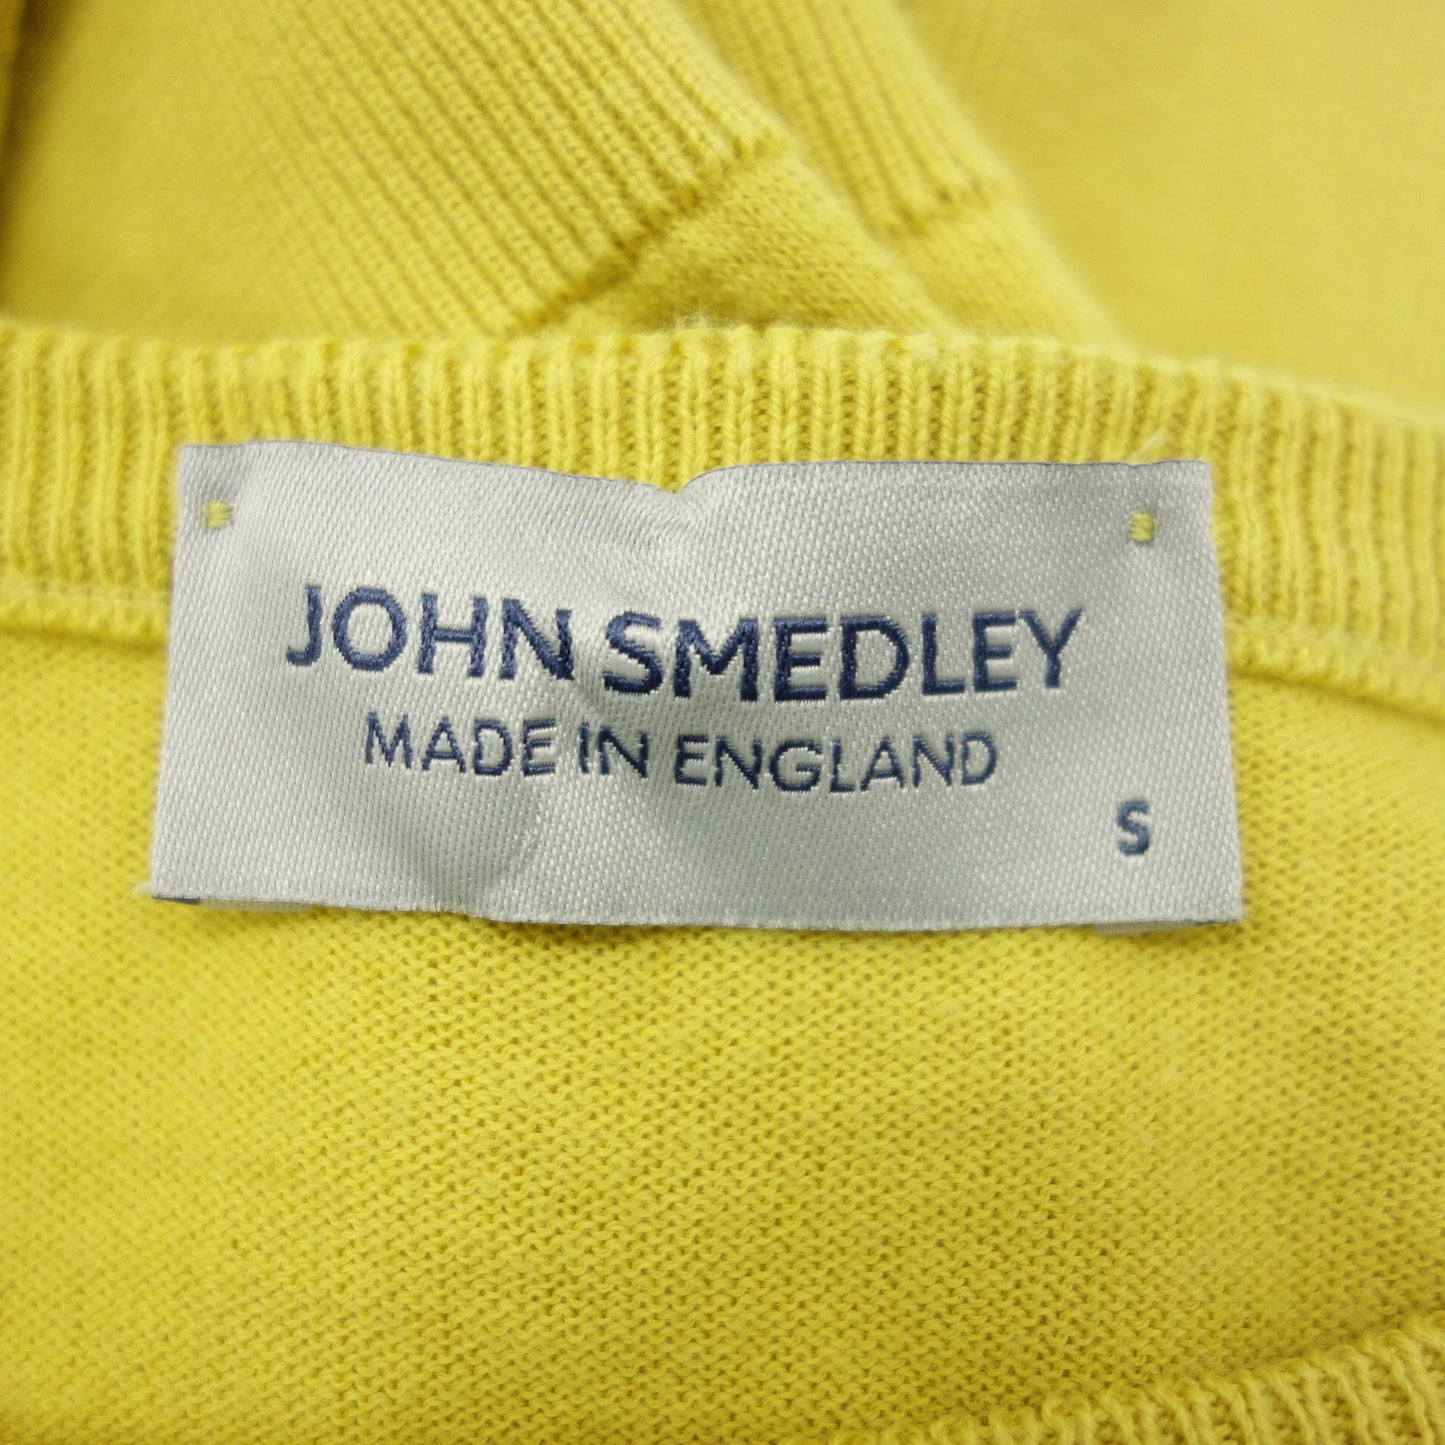 JOHN SMEDLEY Sweater Sea Island Cotton Men's Mustard S JOHN SMEDLEY [AFB32] [Used] 